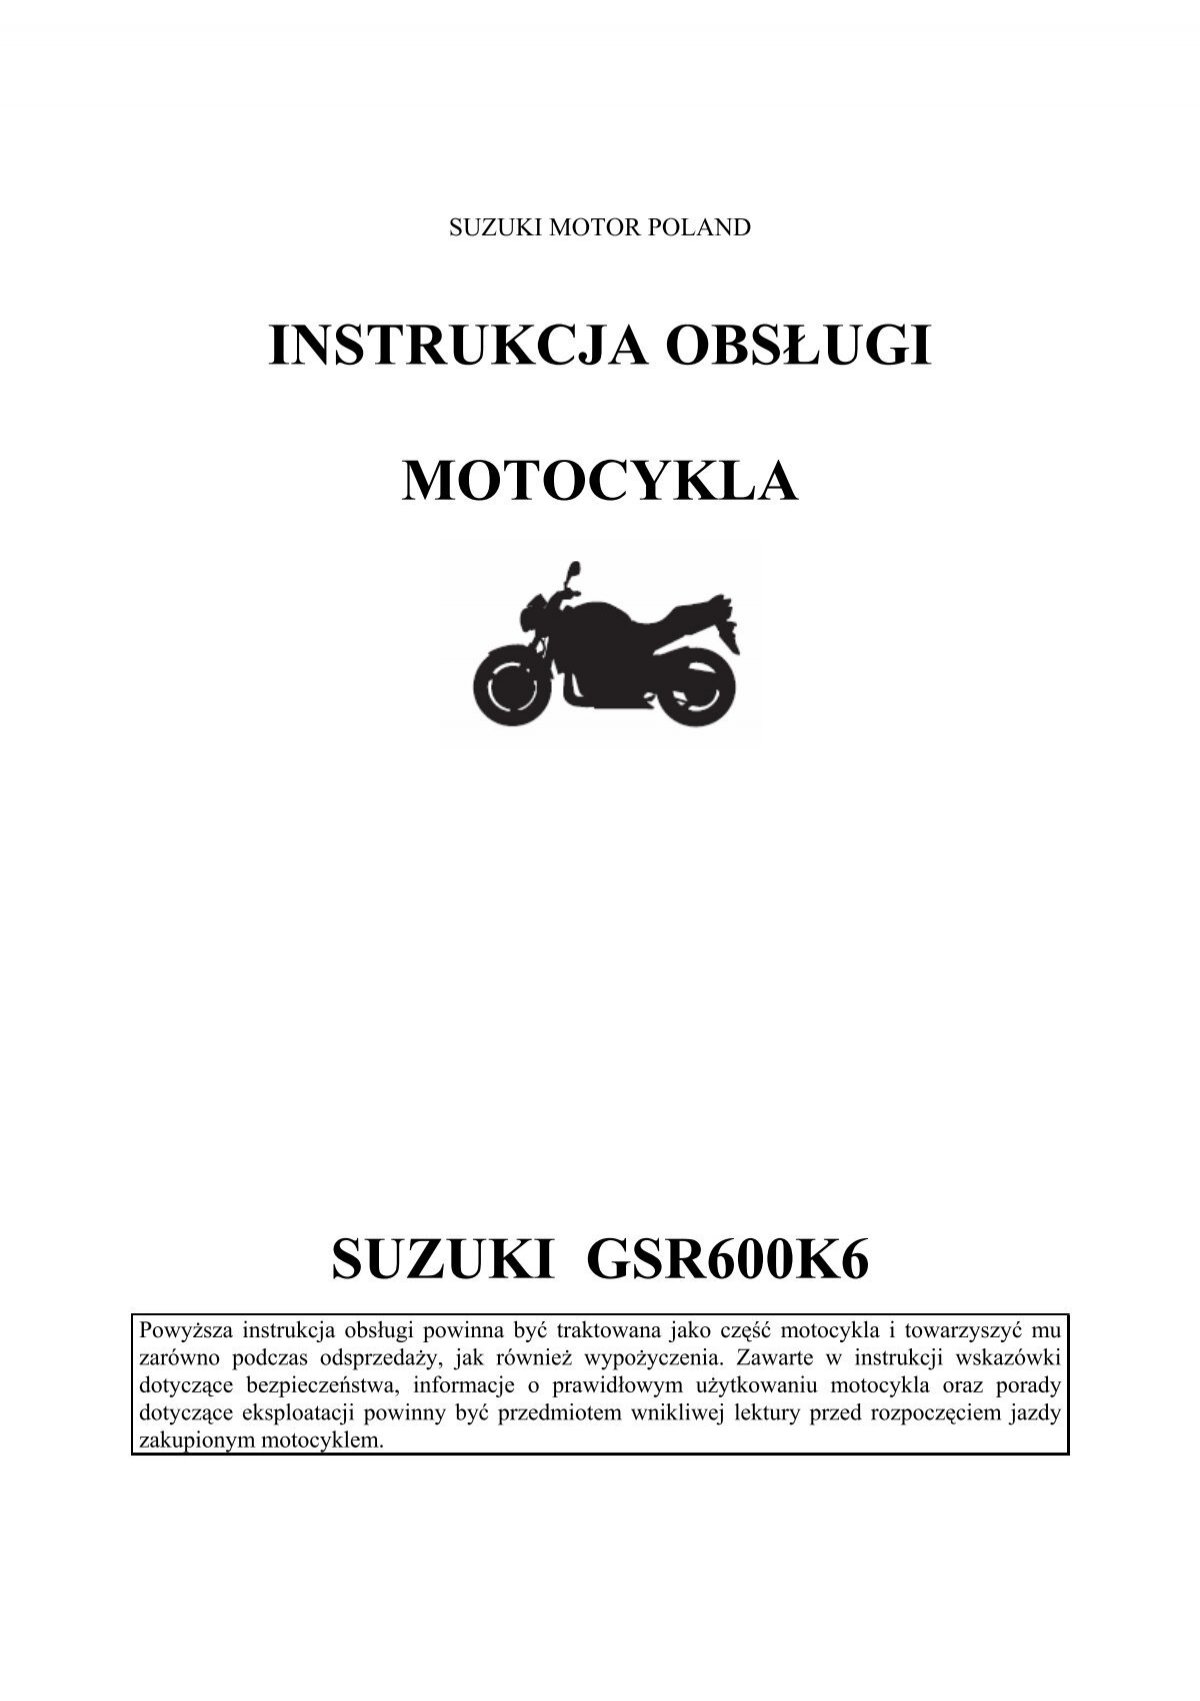 Instrukcja Obsługi Motocykla Suzuki Gsr600K6 - Suzuki Motor Poland